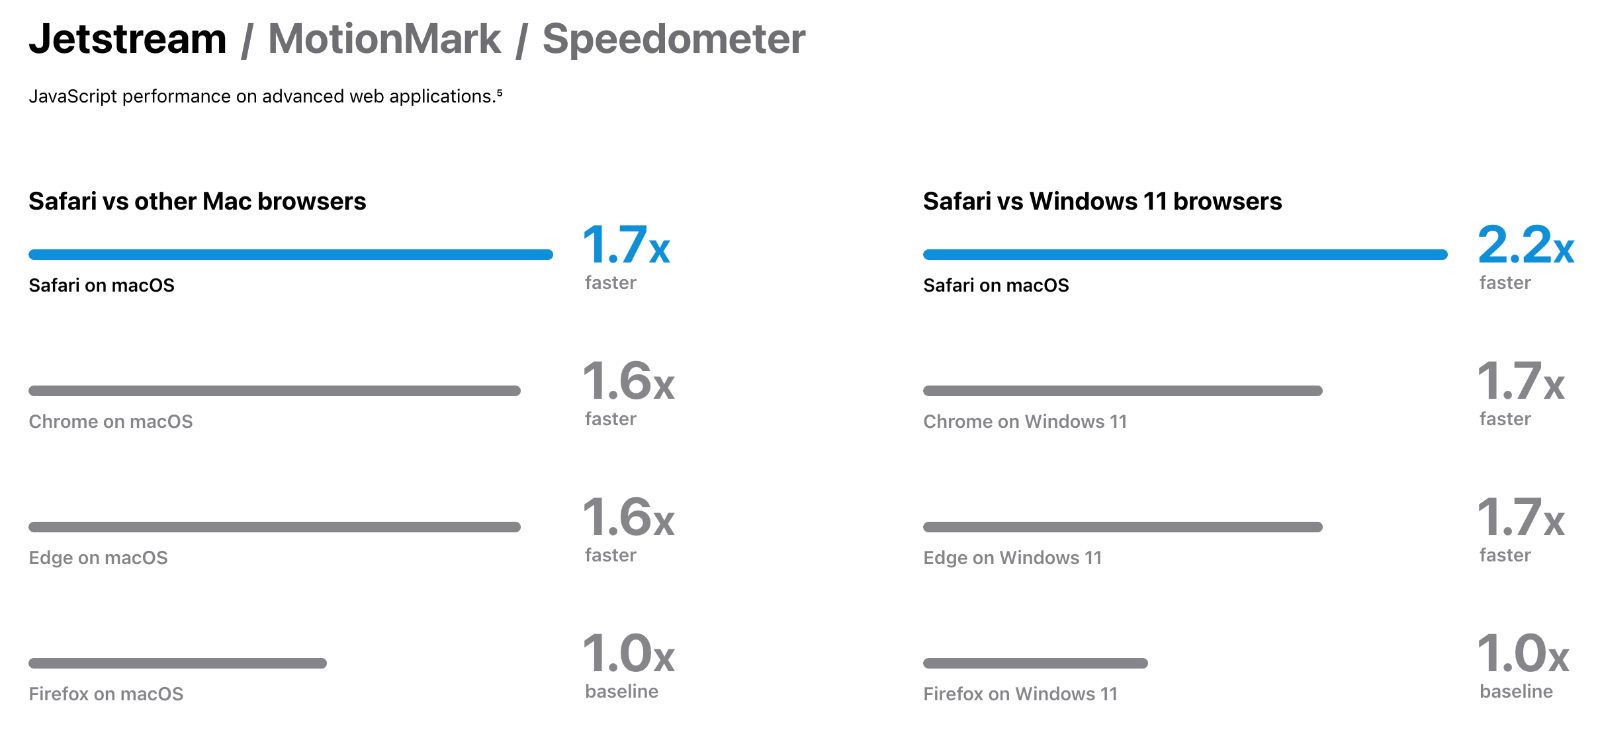 Safari speed comparisons from Apple's websites